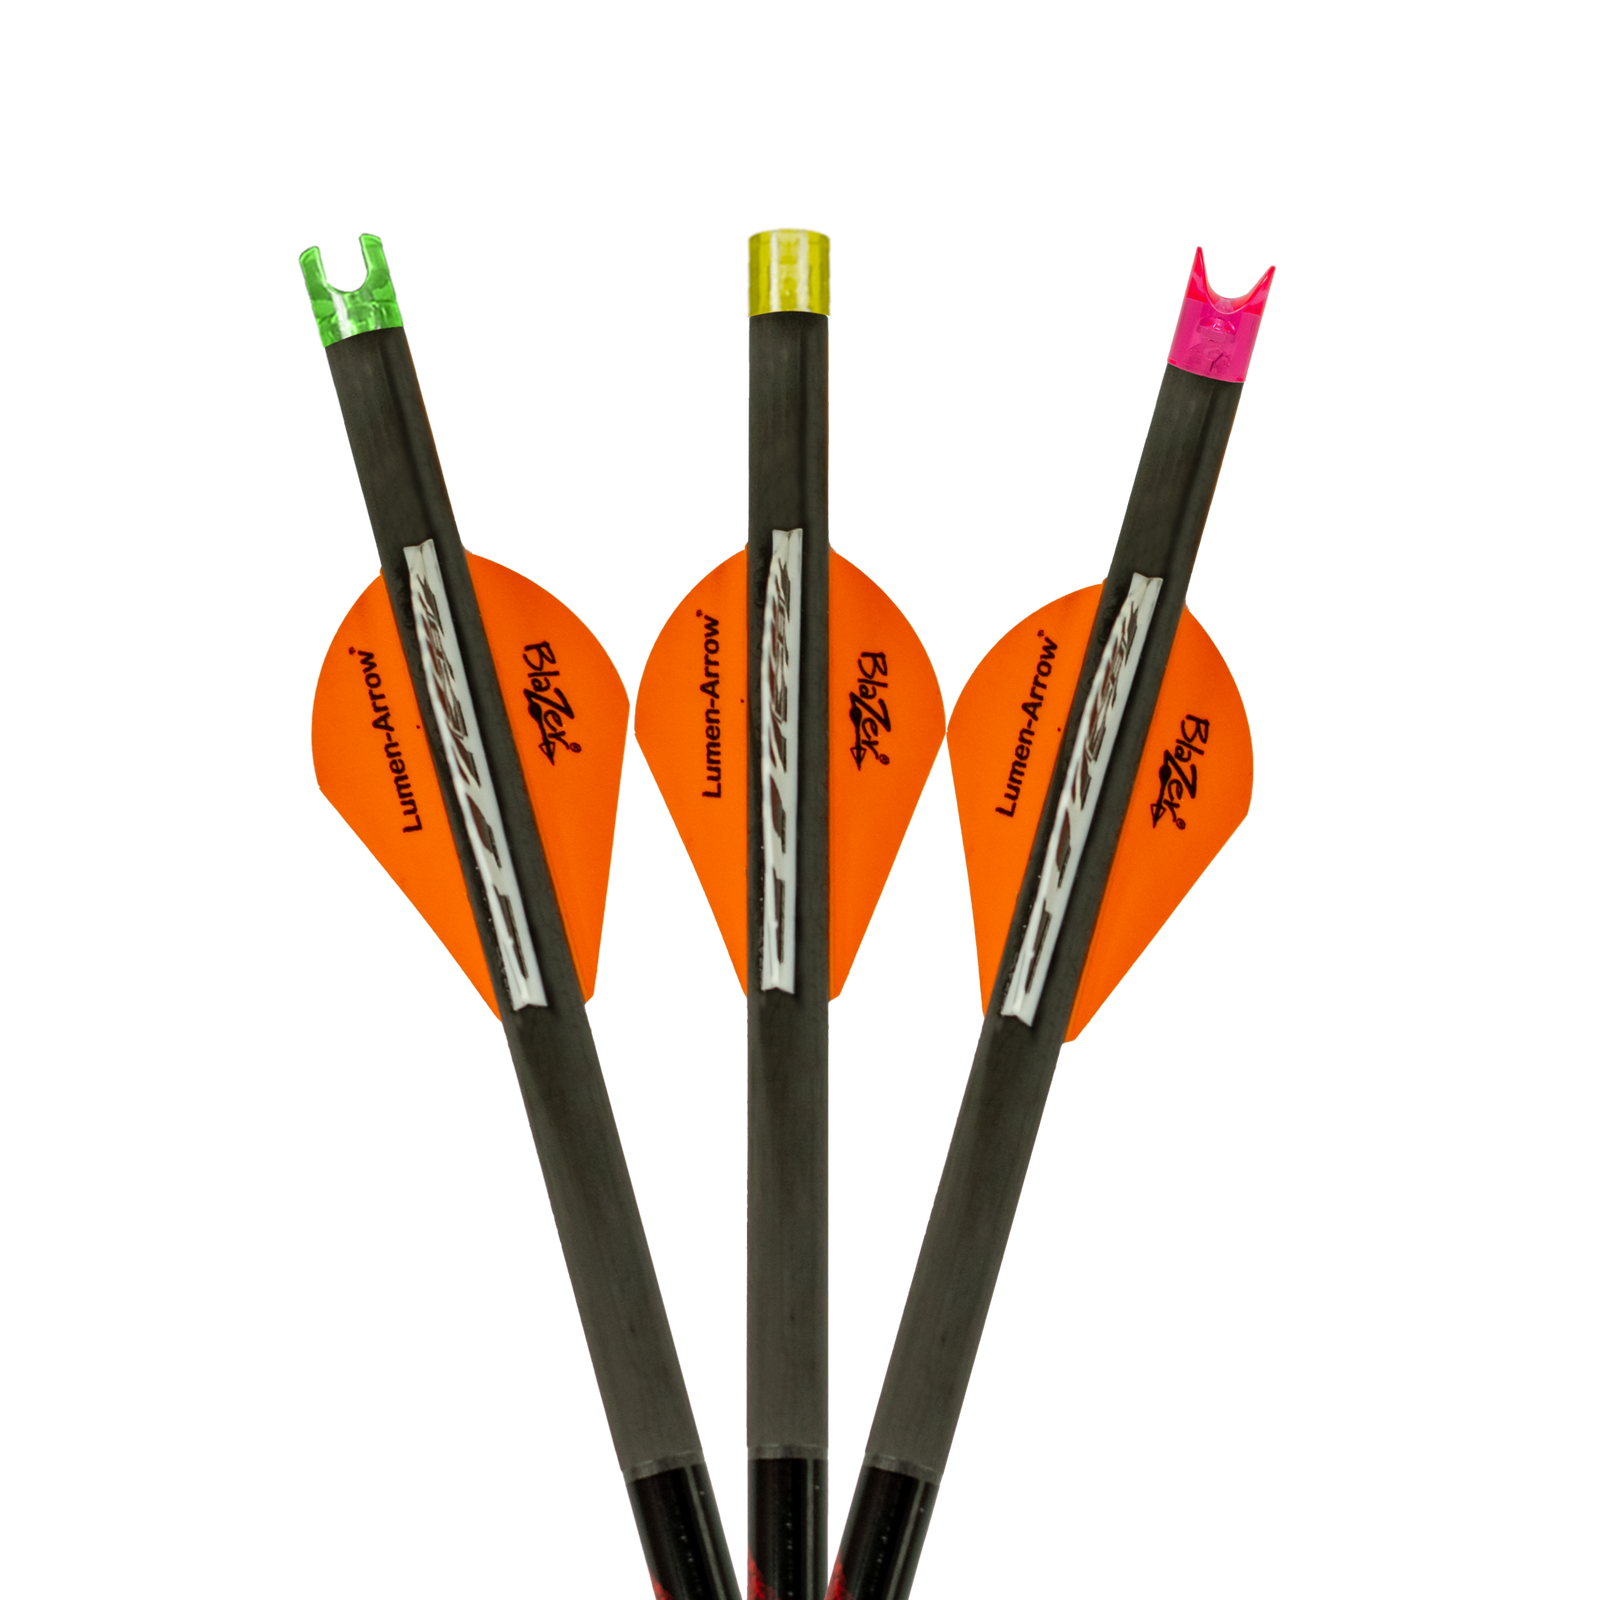 Lumenok GTC Combo Pack - Orange Lighted Arrow Nocks